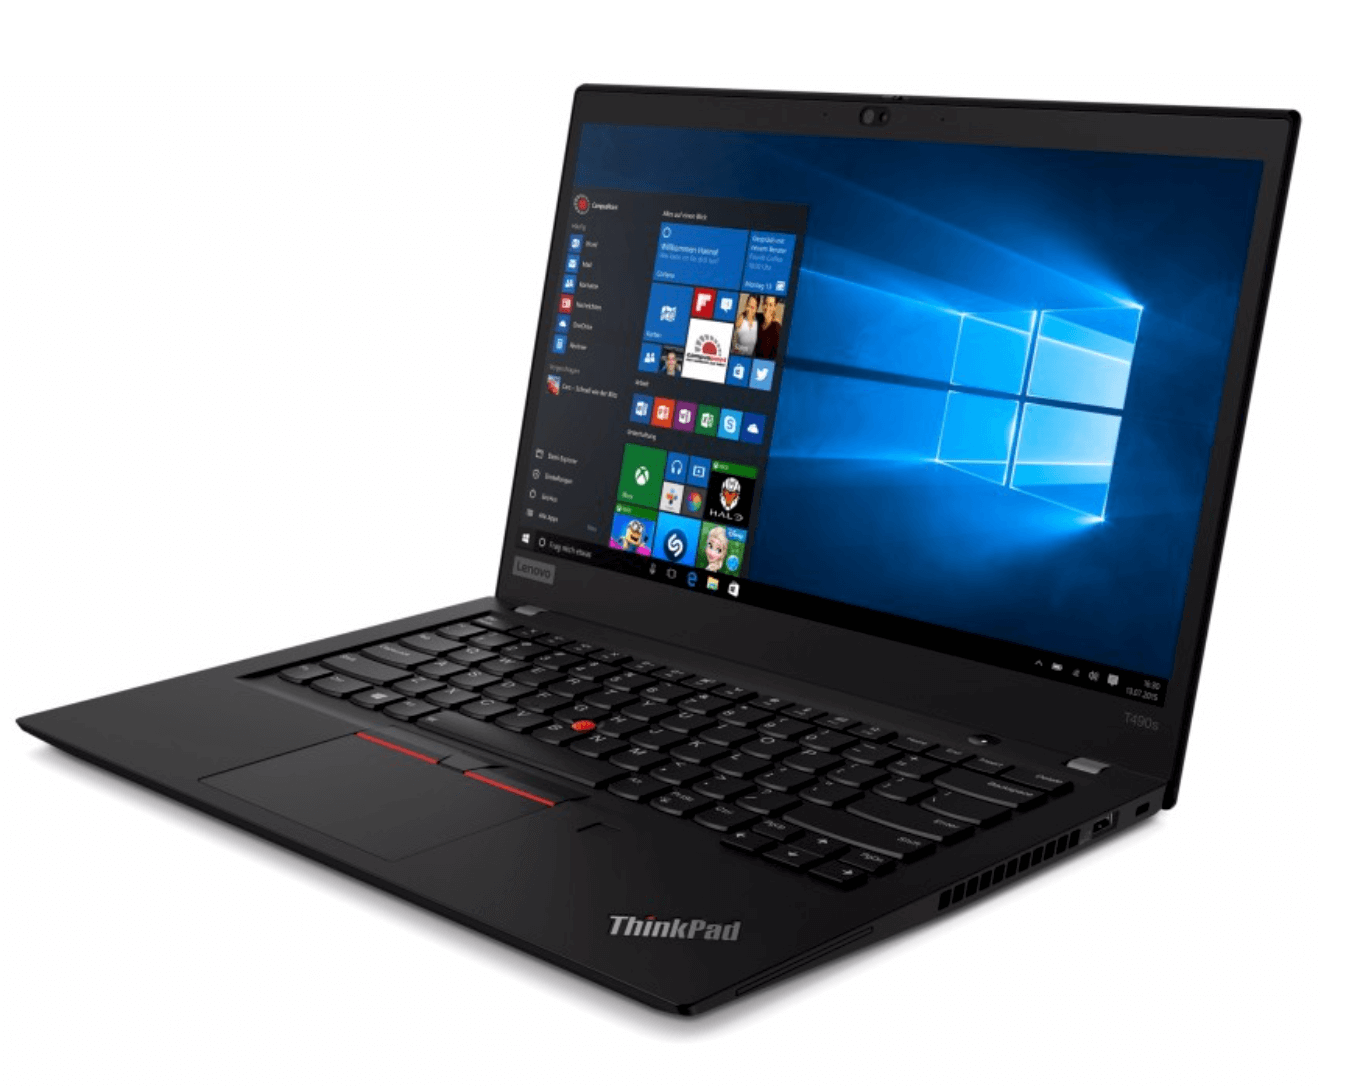 Lenovo ThinkPad T490S 14-inch Reviews - TechSpot